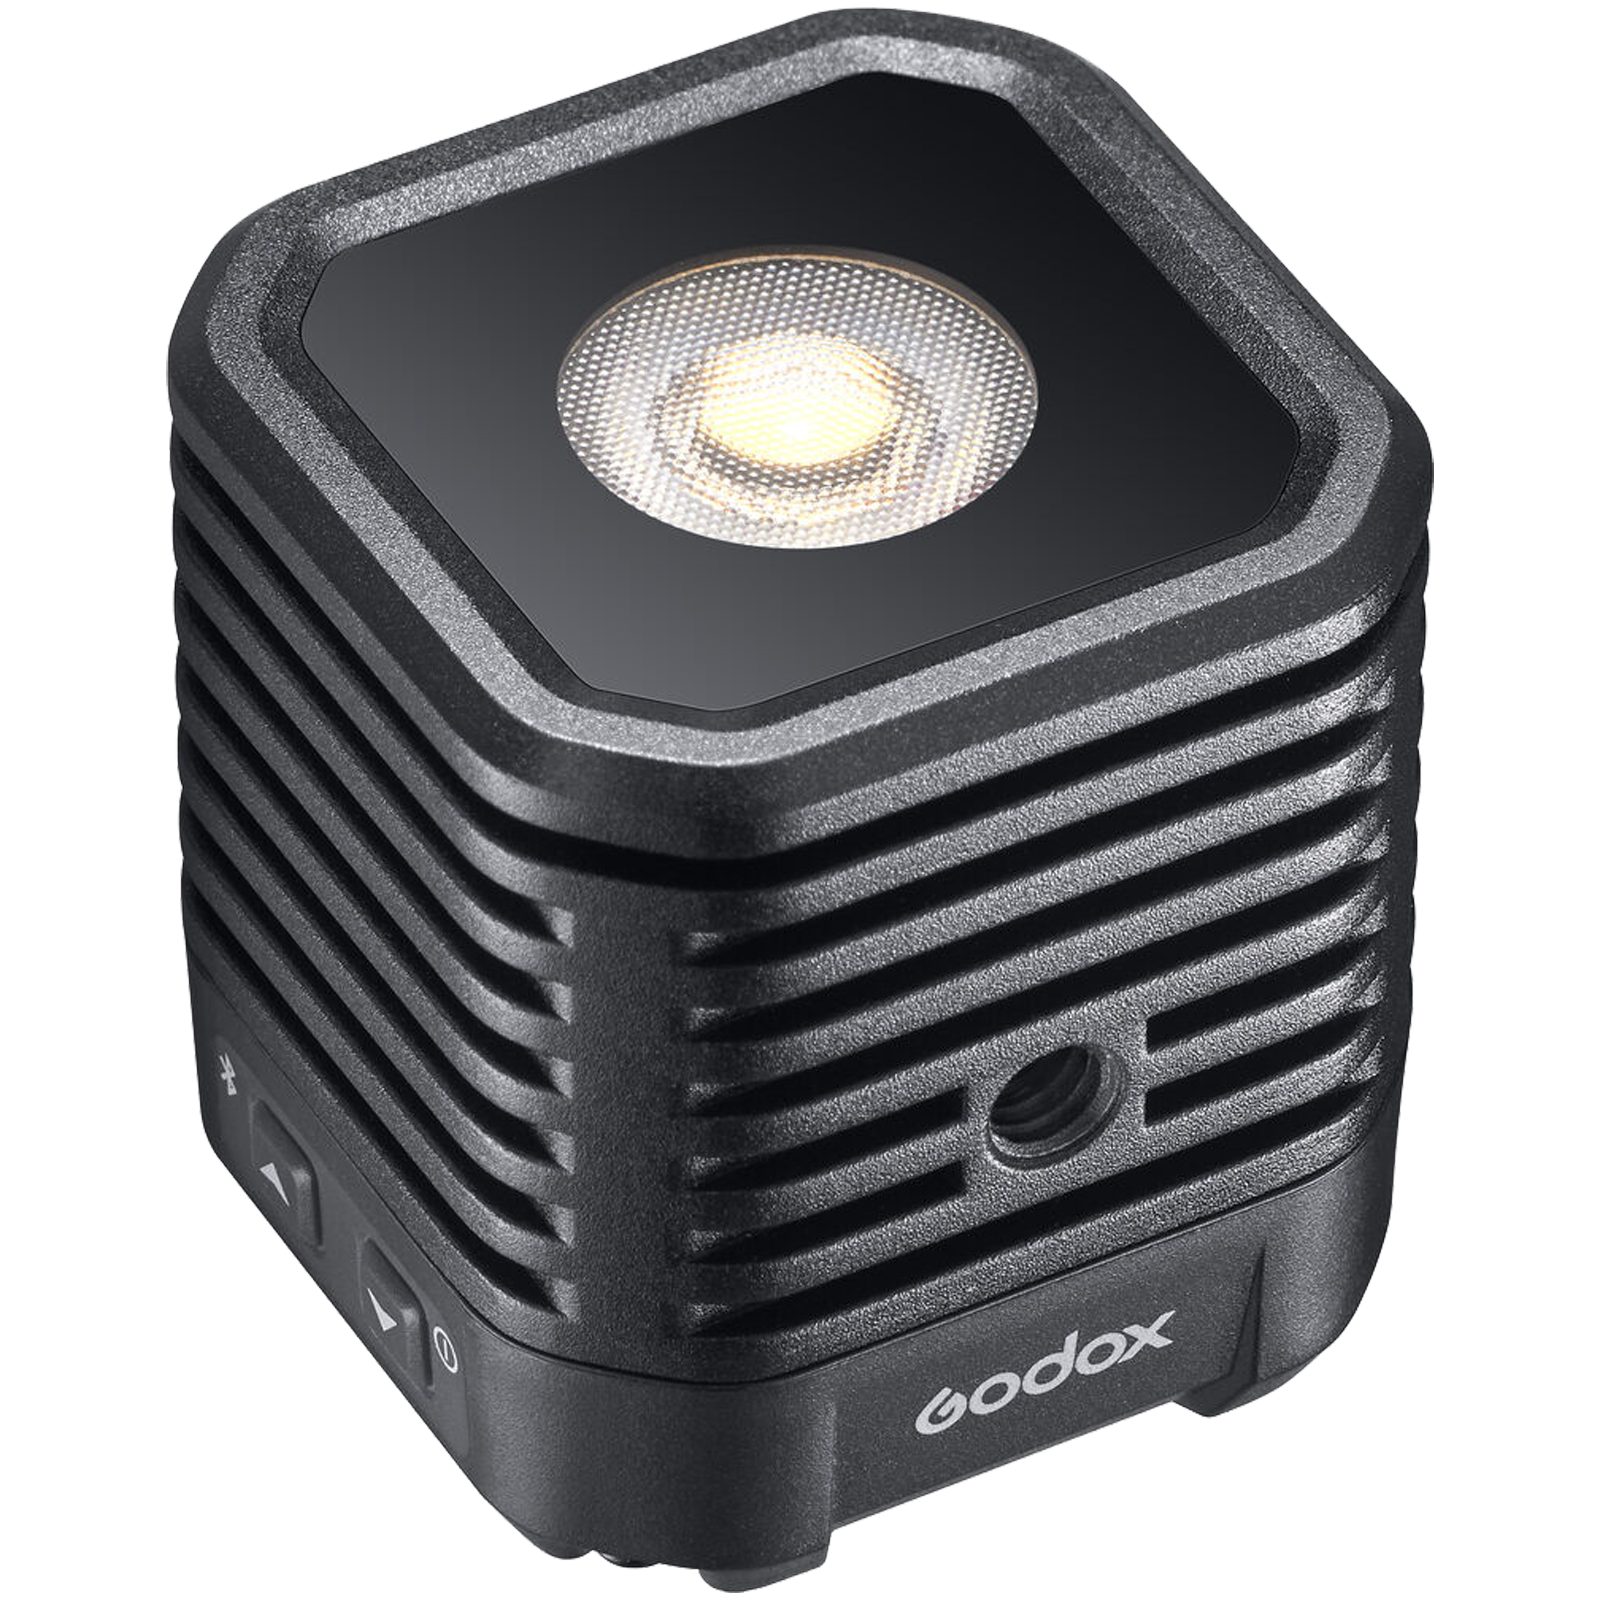 Godox LED Light for Cameras (Continuous Light Output, WL4B, Black)